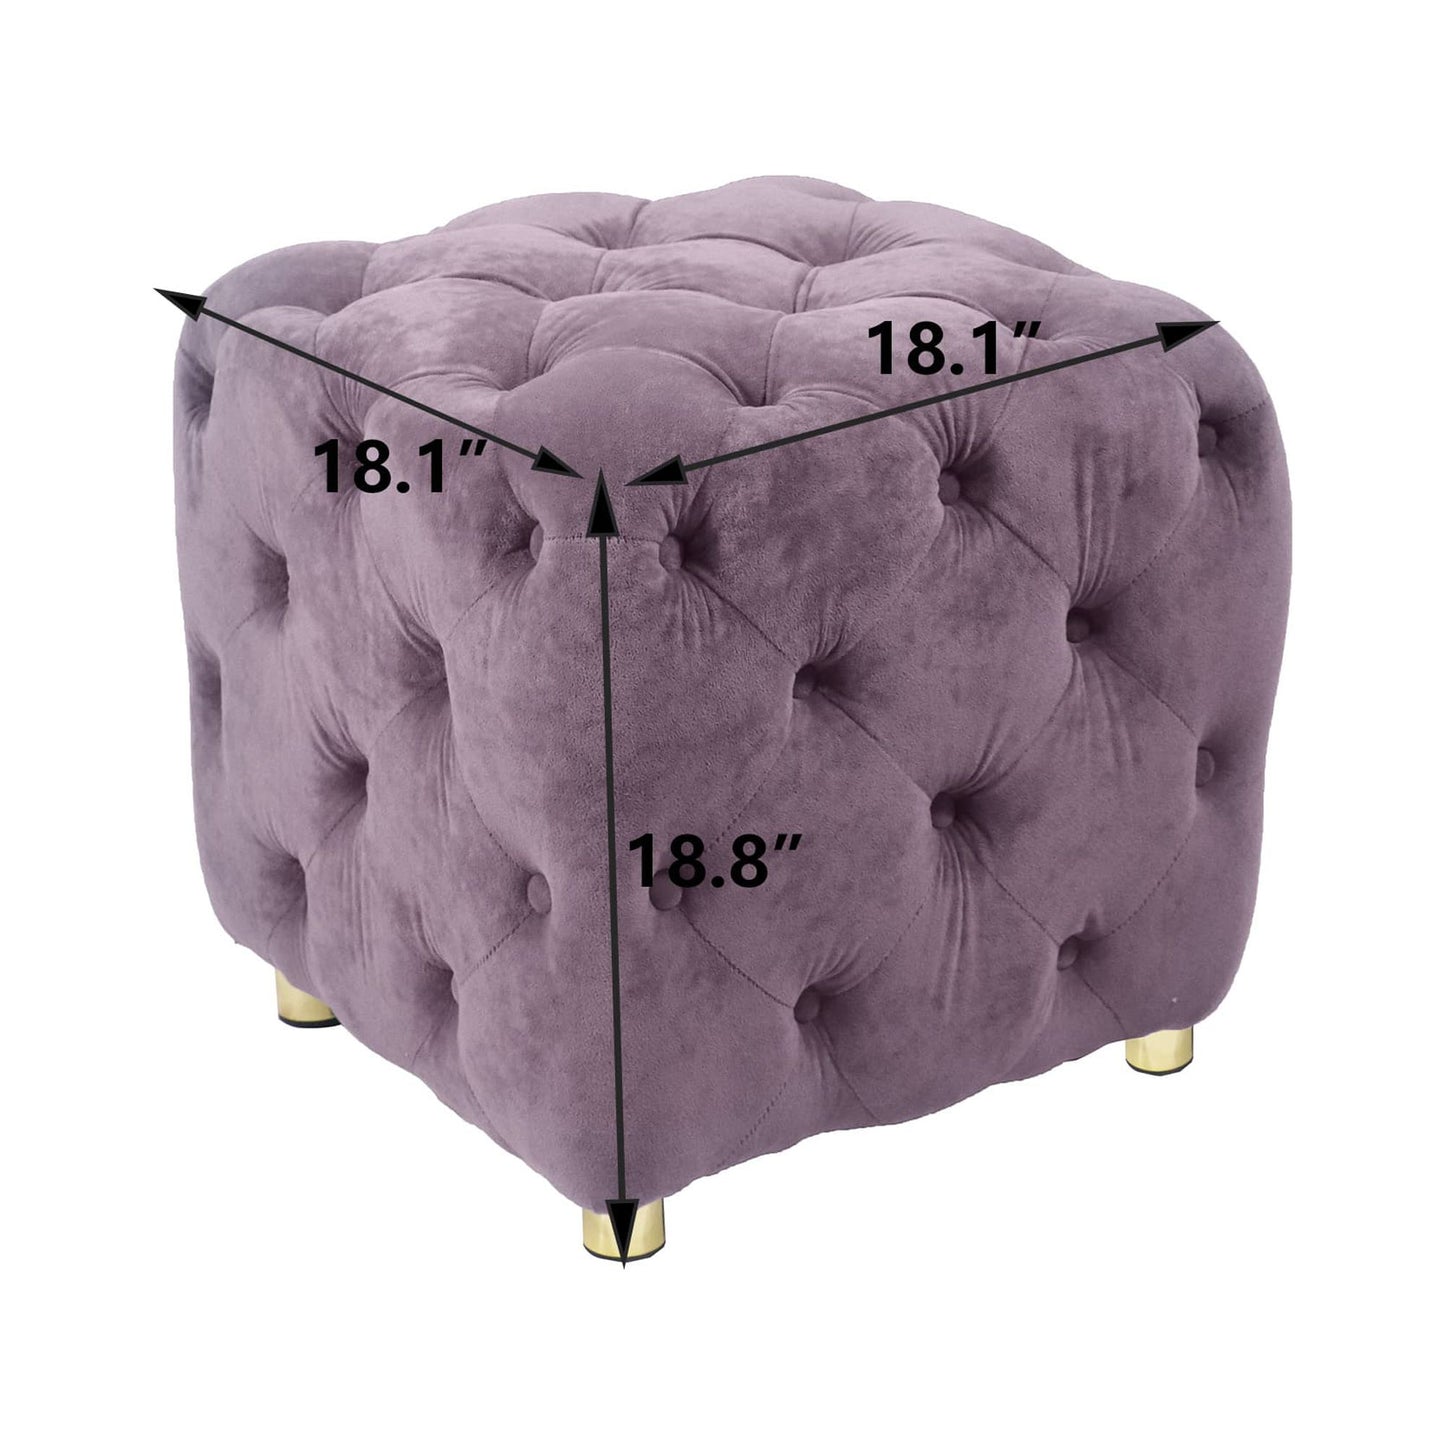 Modern Velvet Upholstered Square Ottoman, Exquisite Small Soft Foot Stool- Purple